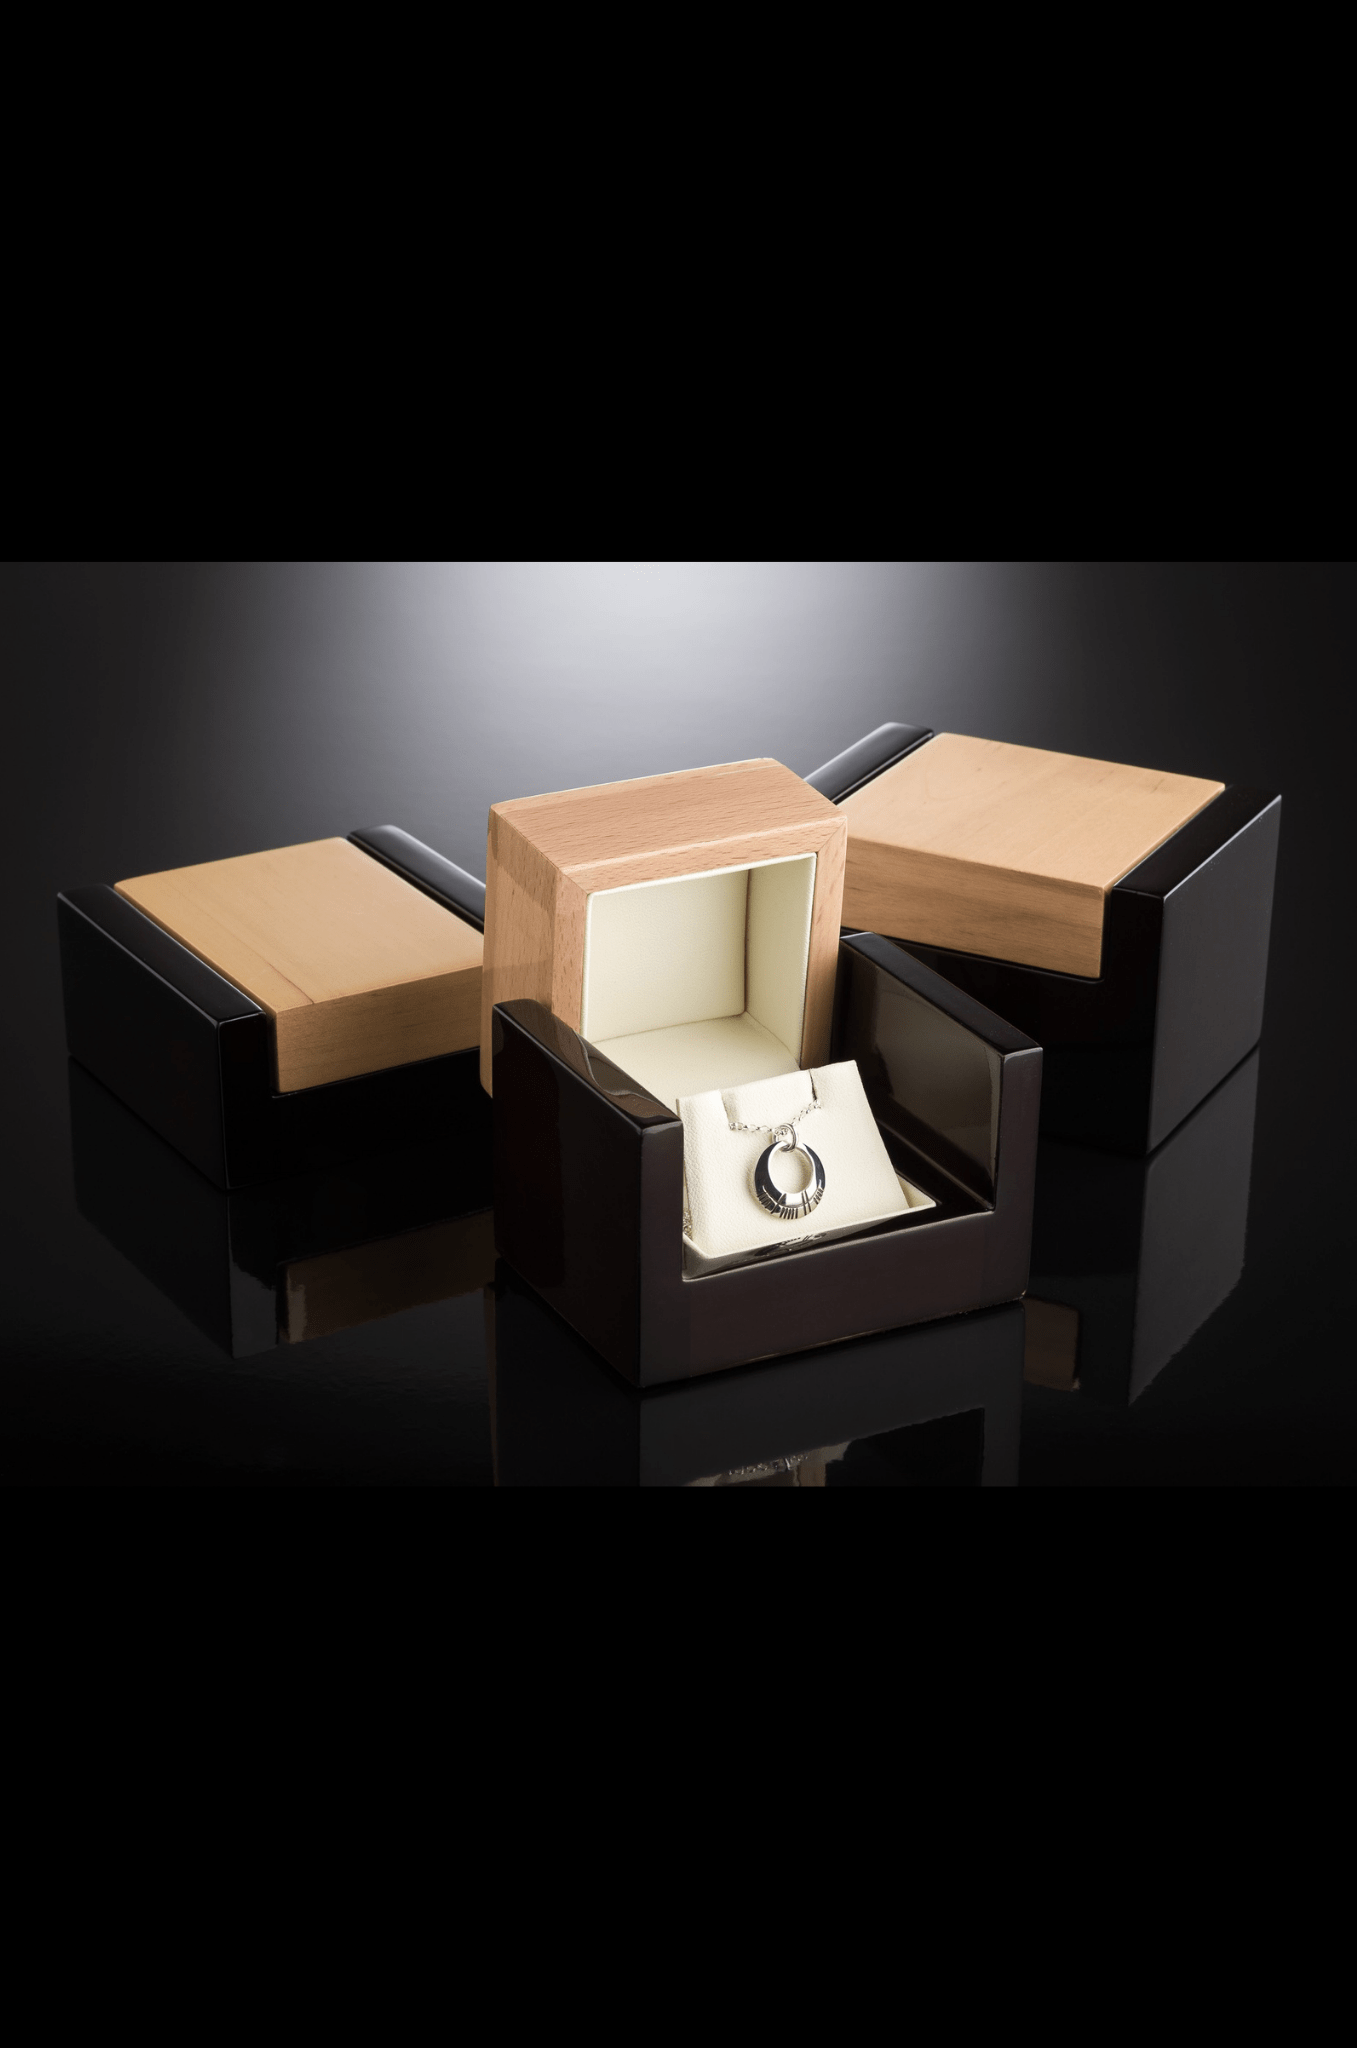 torc pendant in presentation box